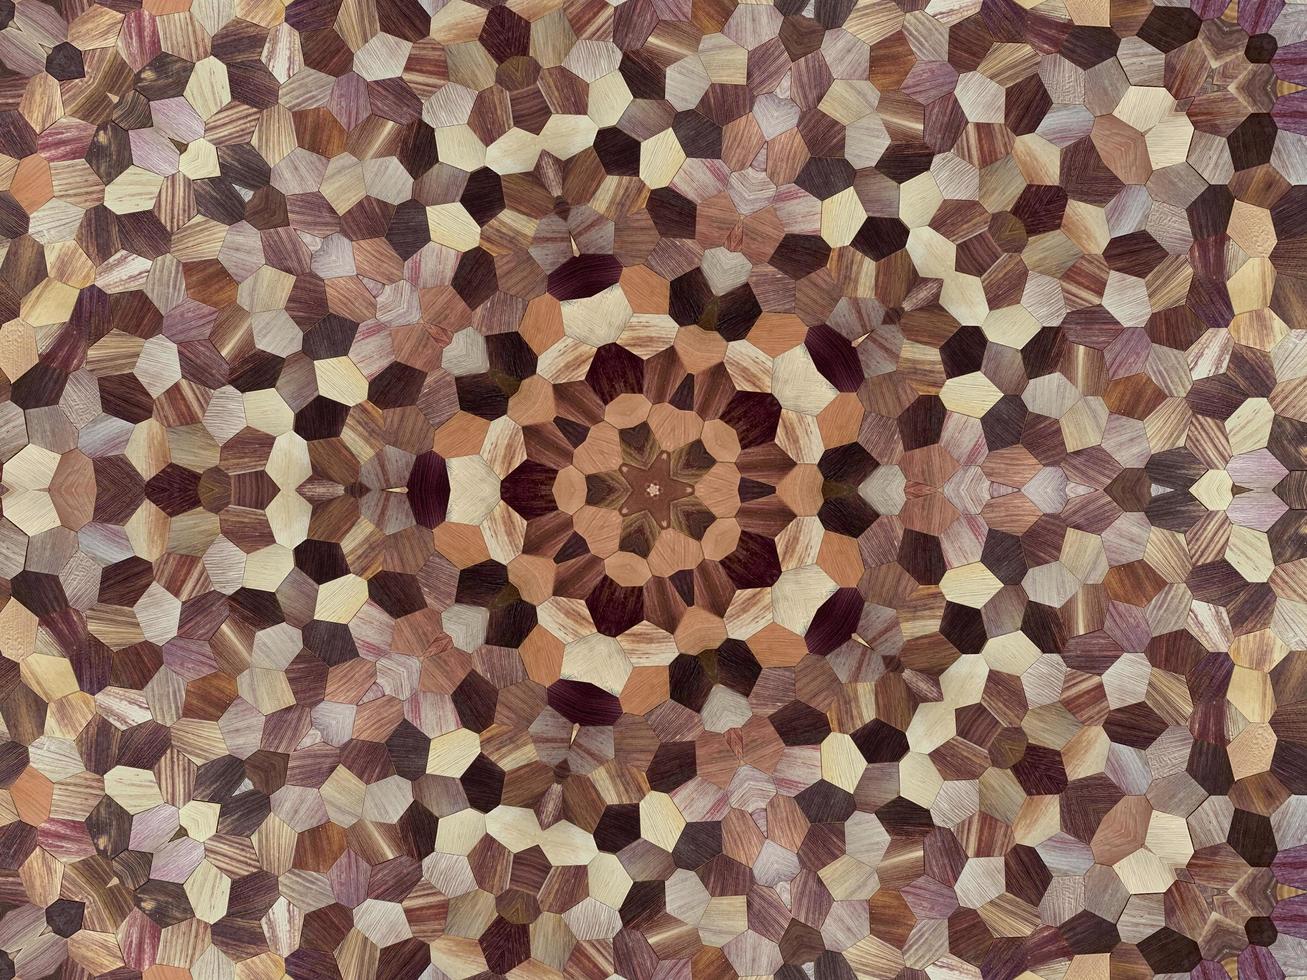 Wood texture abstract background. Kaleidoscope pattern. photo